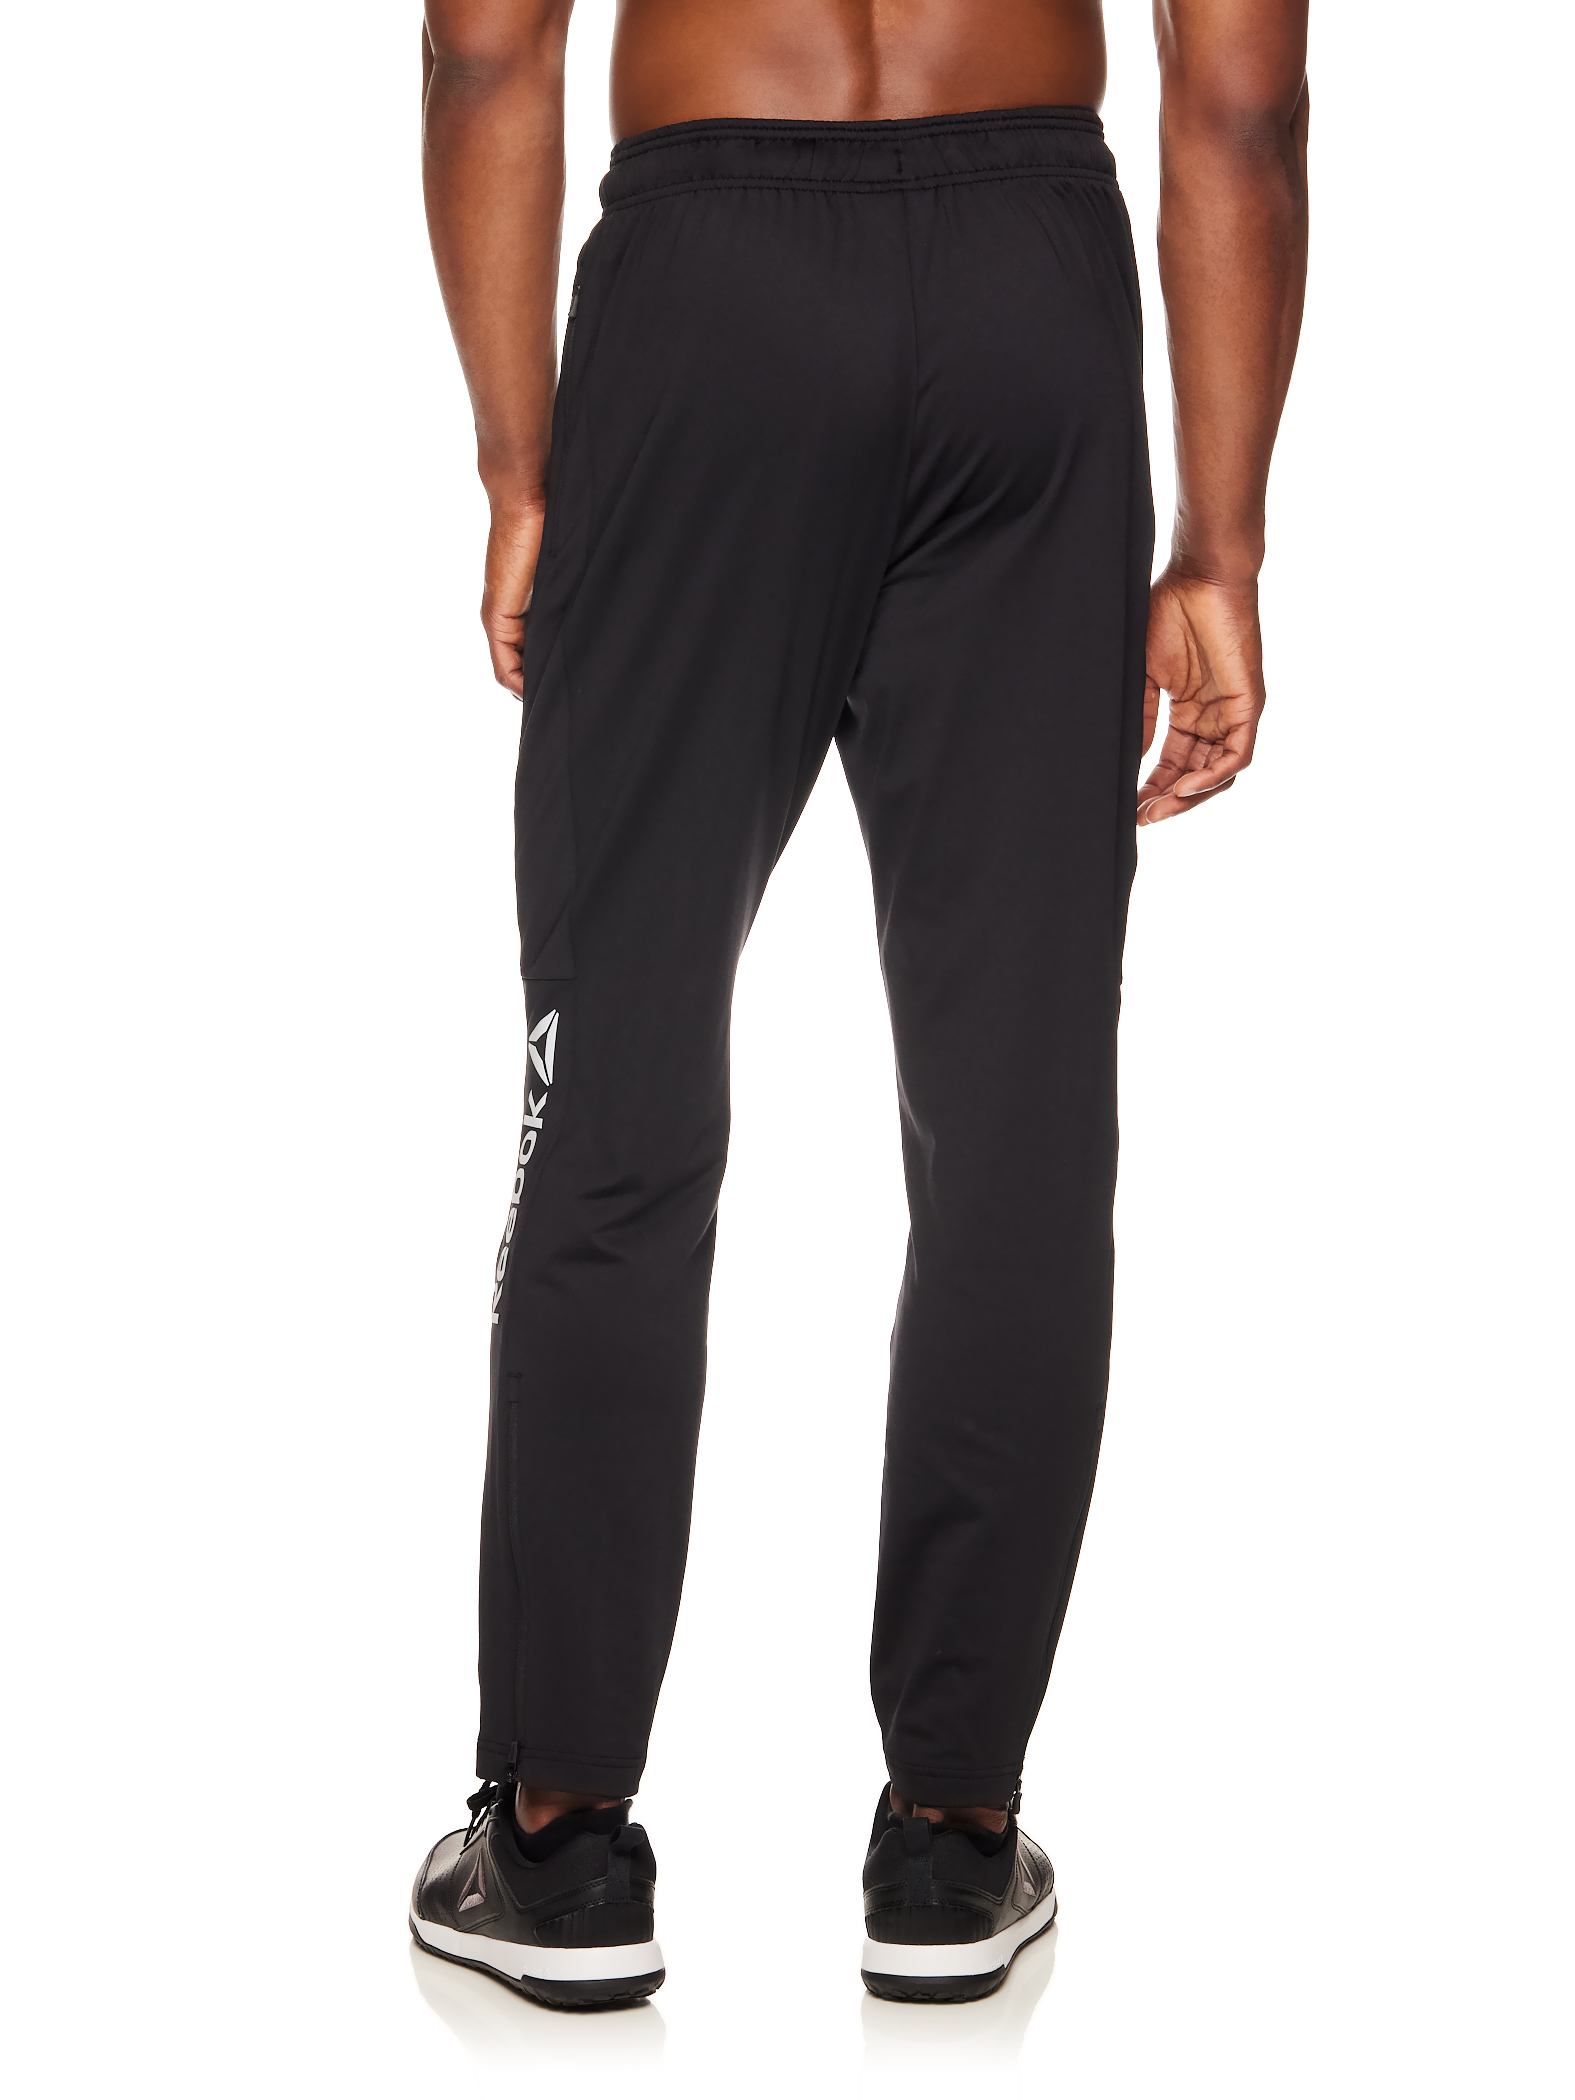 Reebok Men's and Big Men's Recharge Pants, up to Size 3XL - Walmart.com